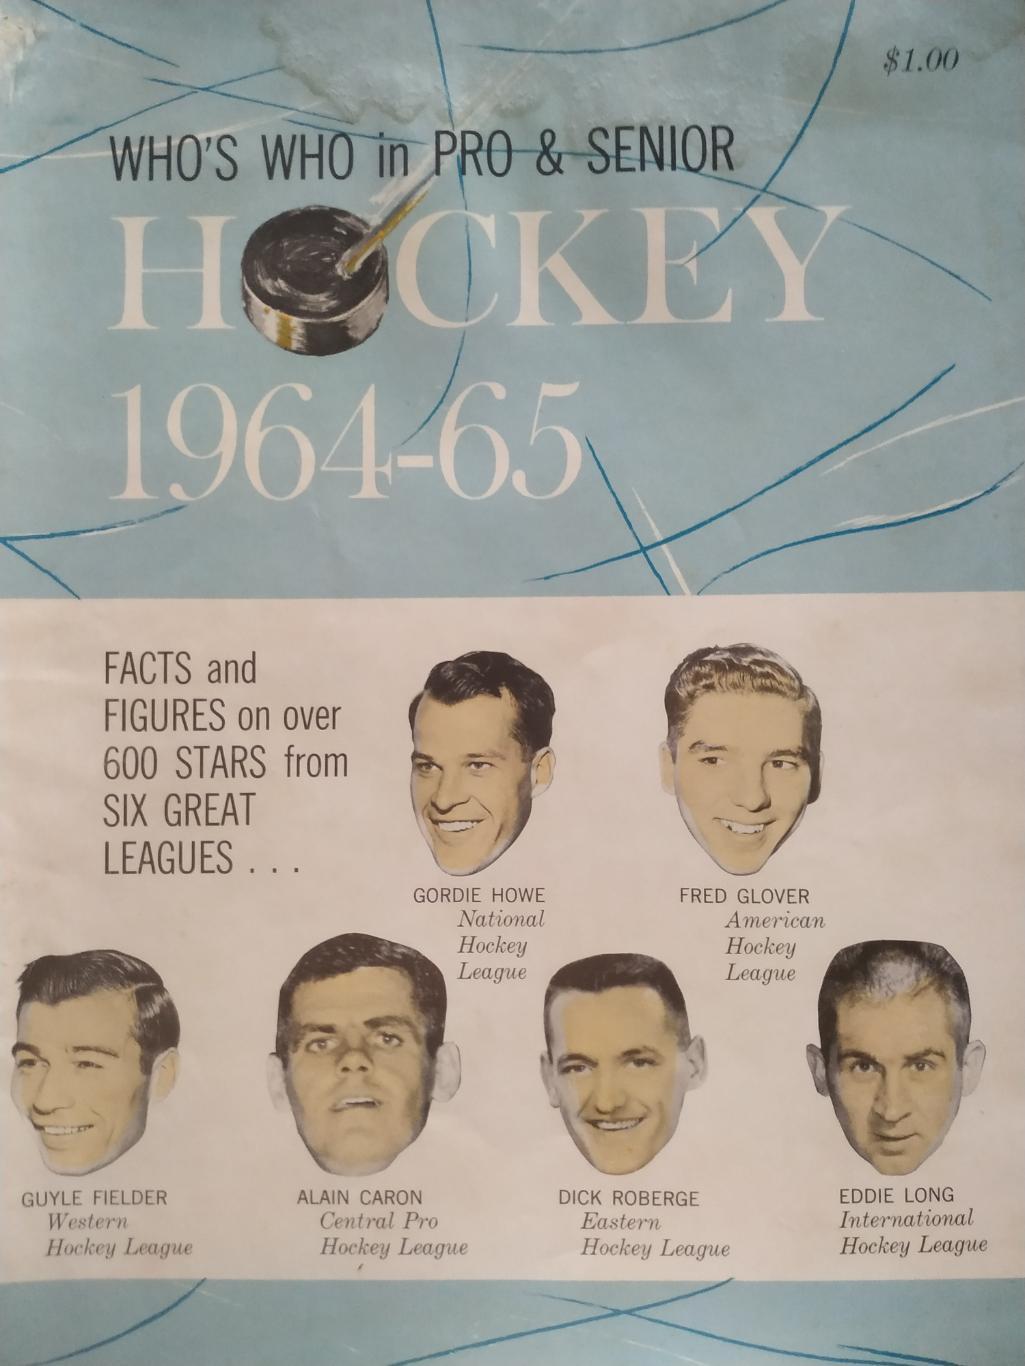 ХОККЕЙ ЖУРНАЛ КТО ЕСТЬ КТО В ХОККЕЕ НХЛ NHL 1964-65 WHOS WHO IN PRO HOCKEY